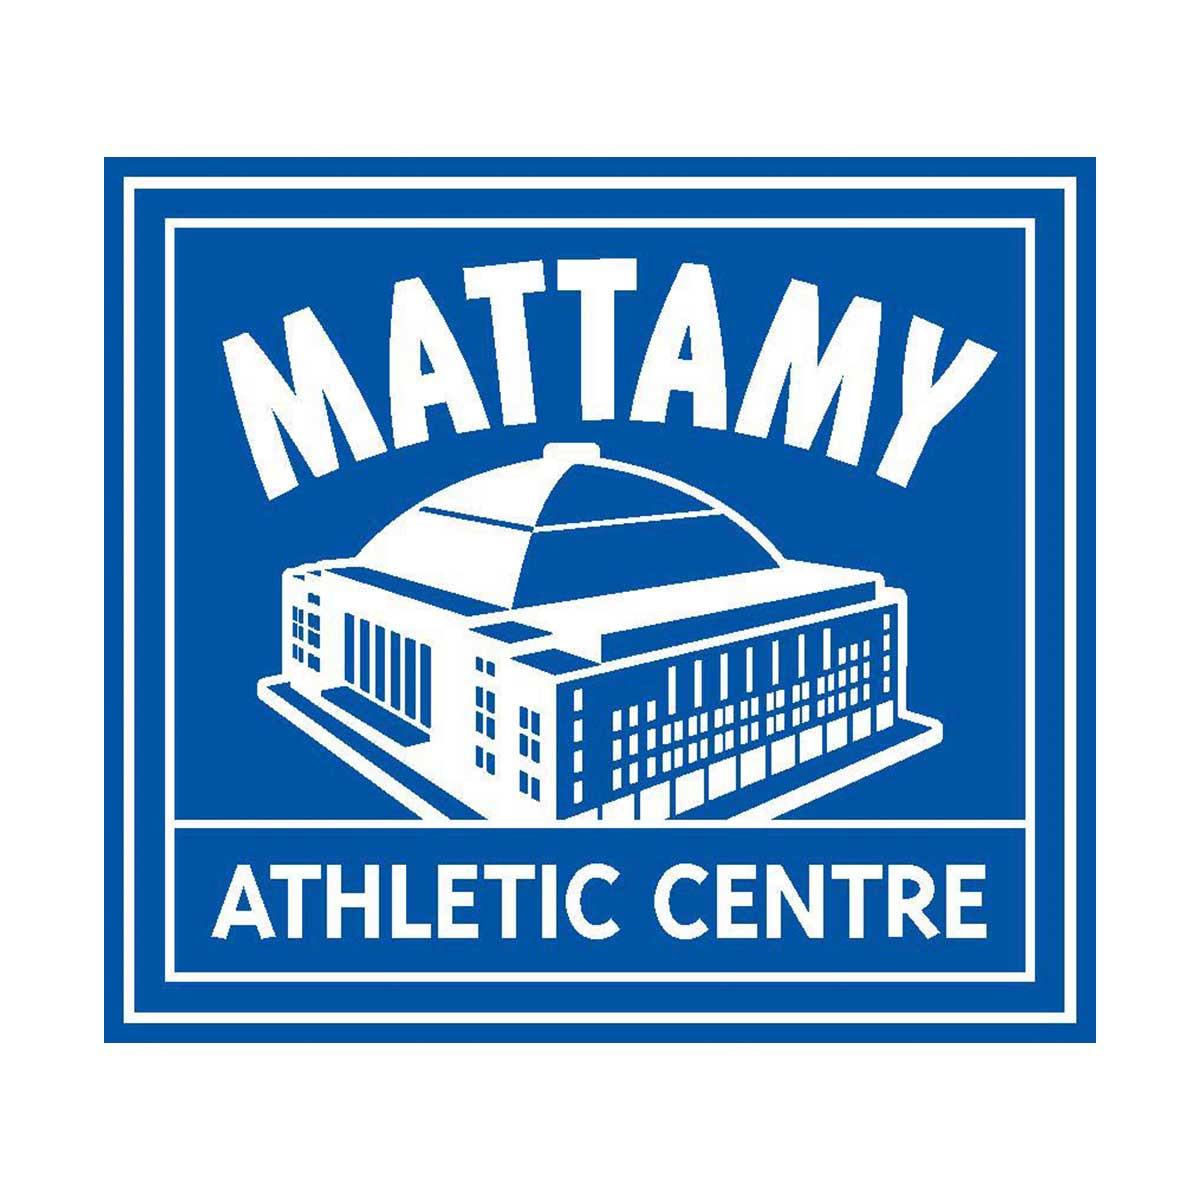 Mattamy Athletic Centre